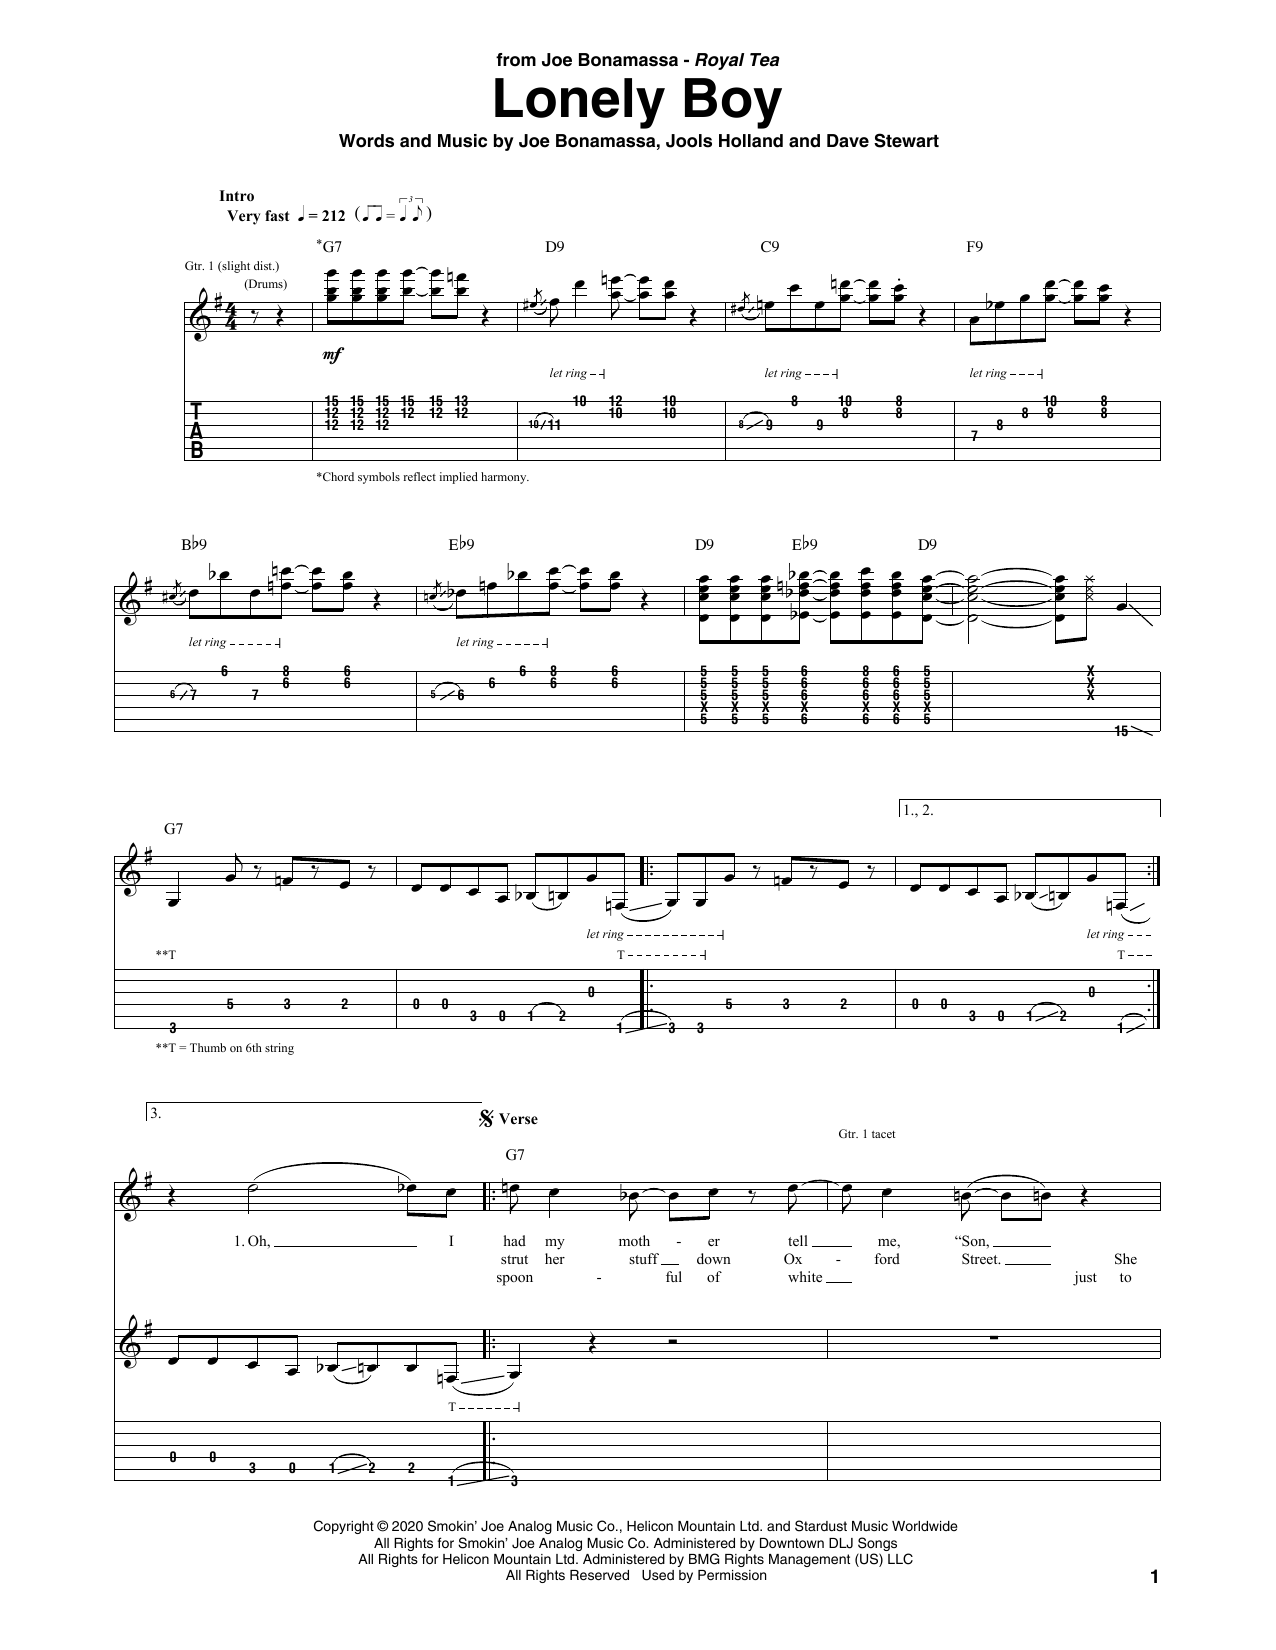 Joe Bonamassa Lonely Boy Sheet Music Notes & Chords for Guitar Tab - Download or Print PDF